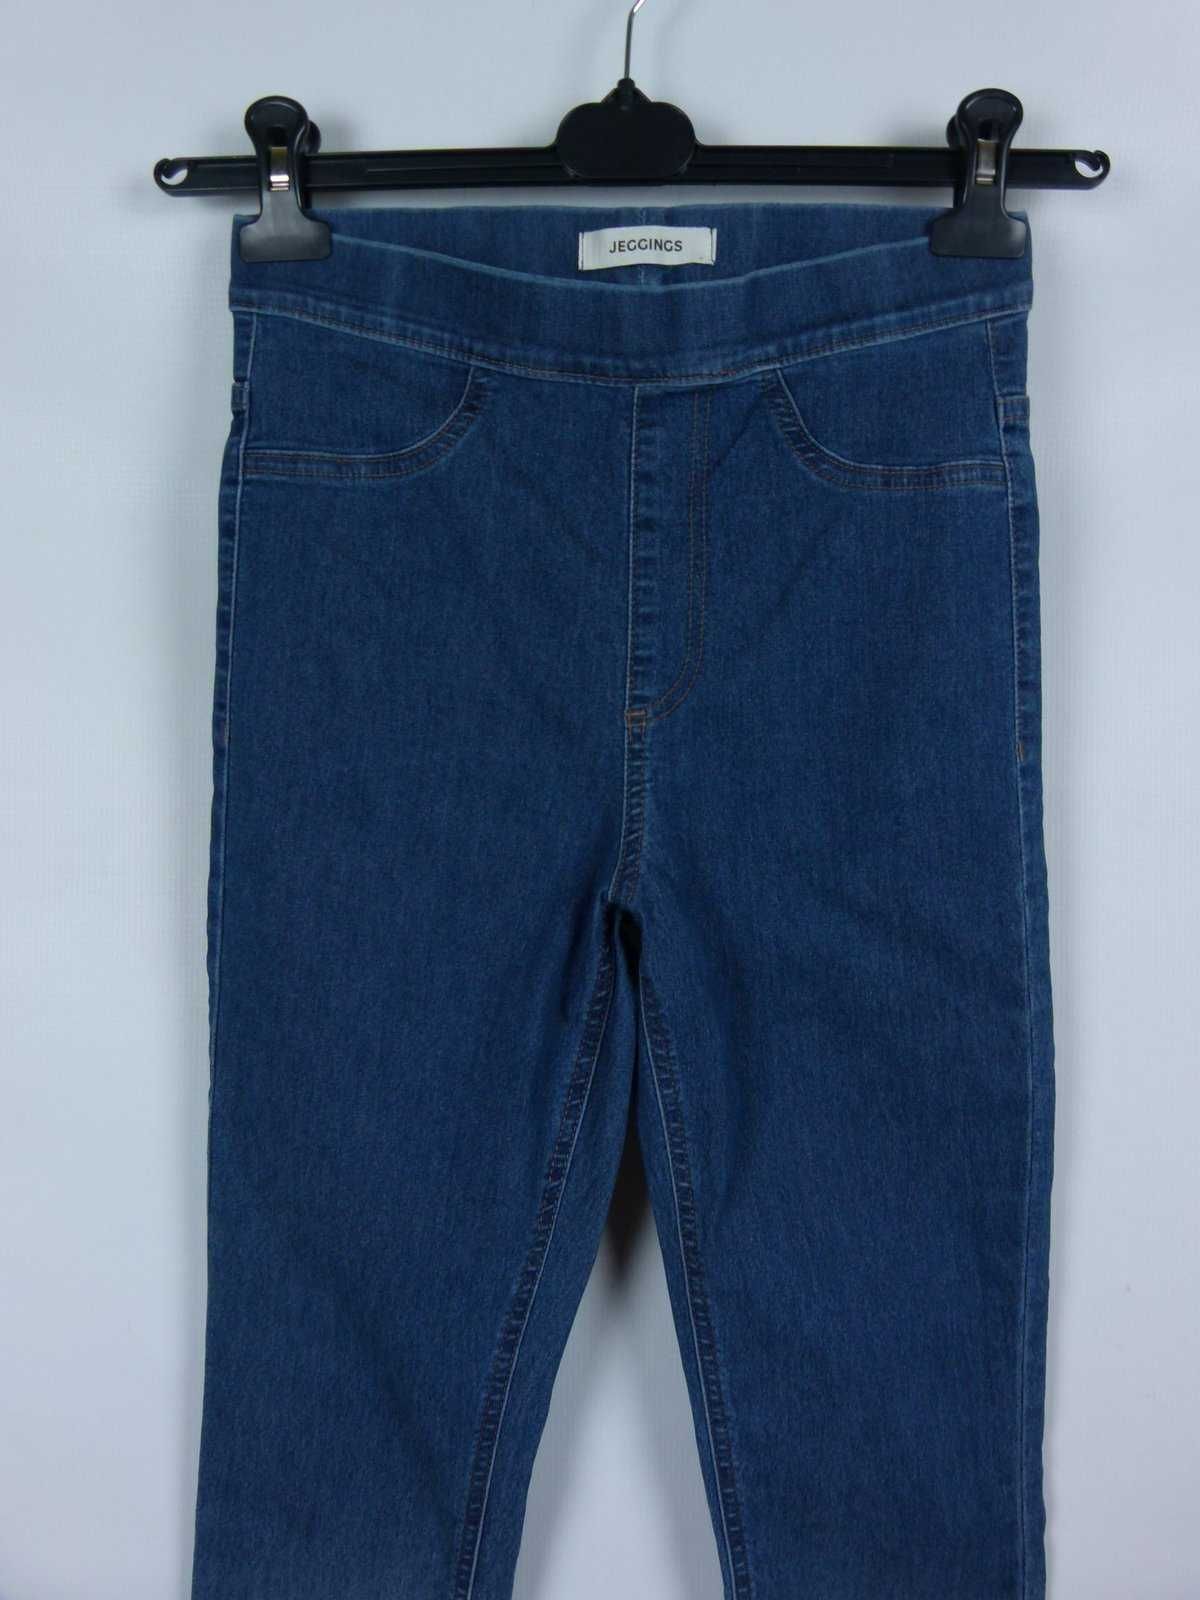 Marks Spencer Jeggings spodnie cienki jeans 8 / 36